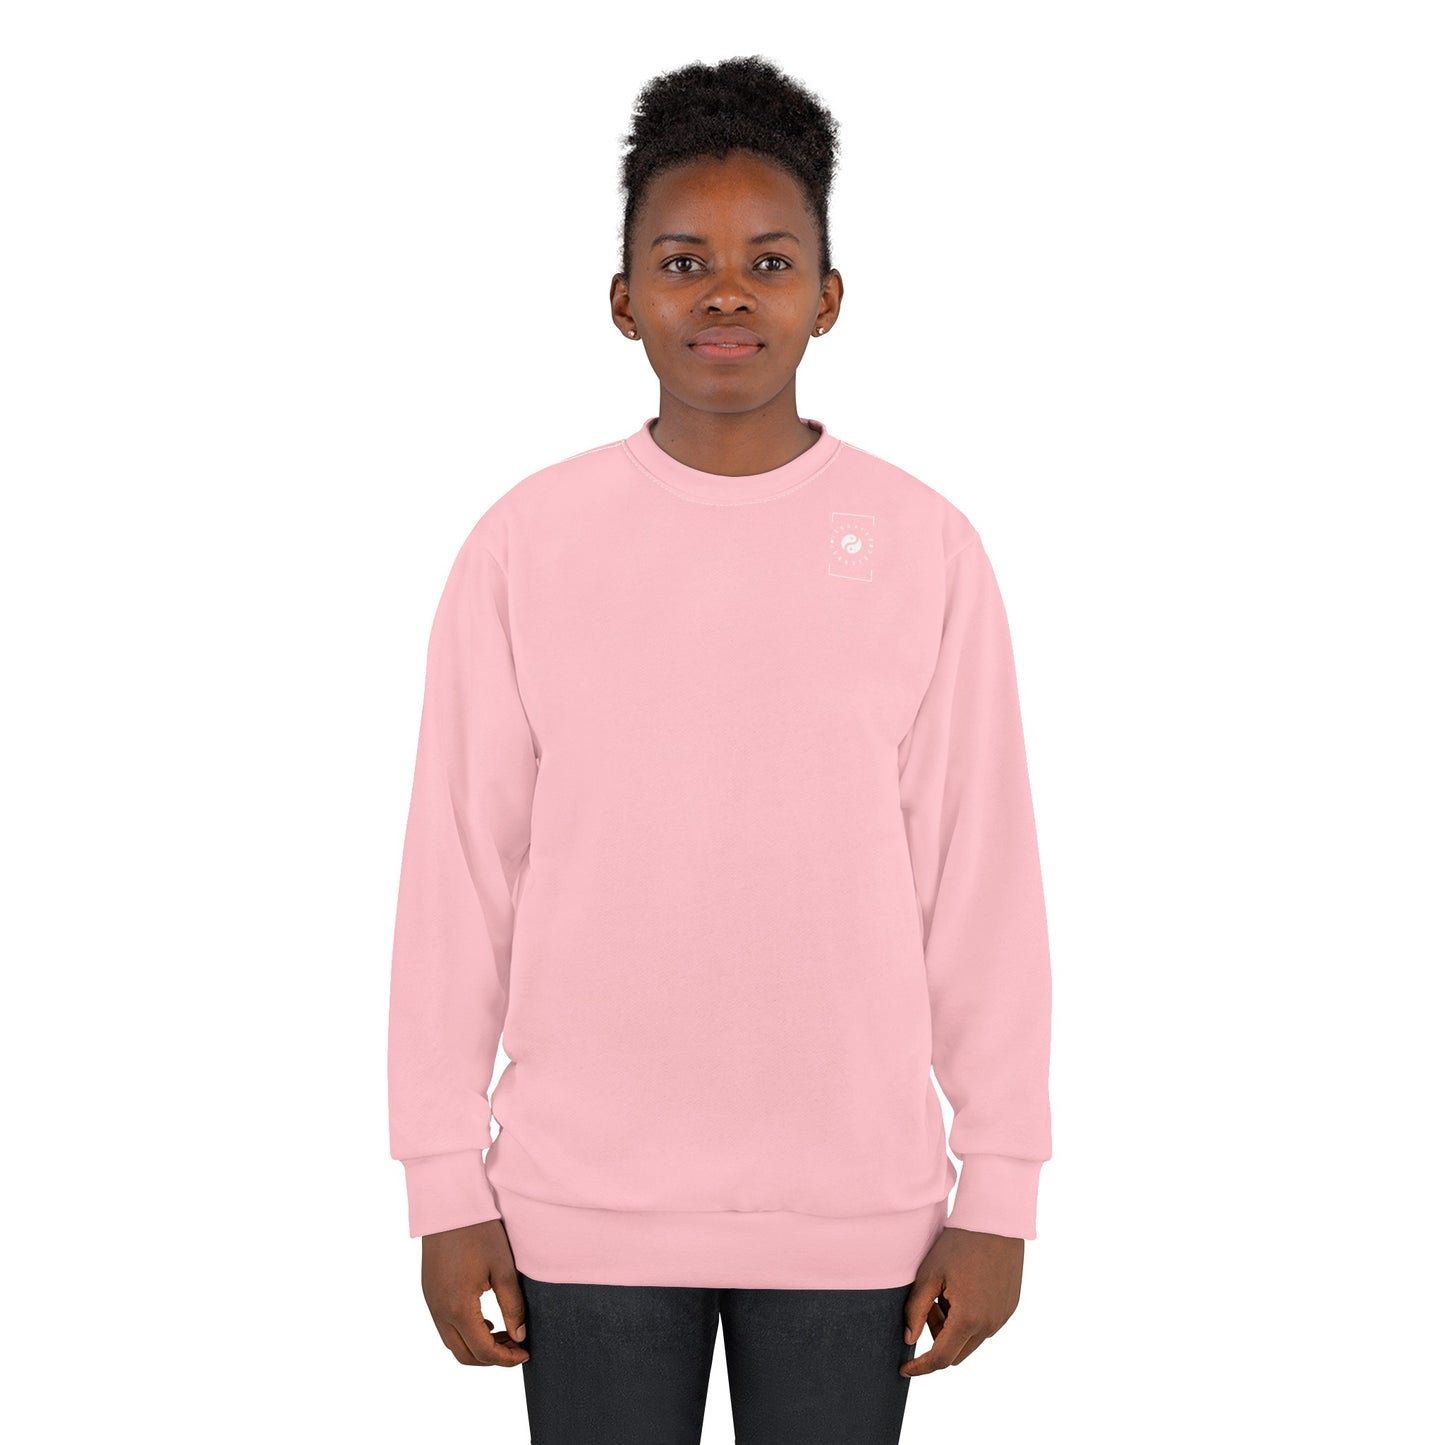 FFCCD4 Light Pink - Unisex Sweatshirt